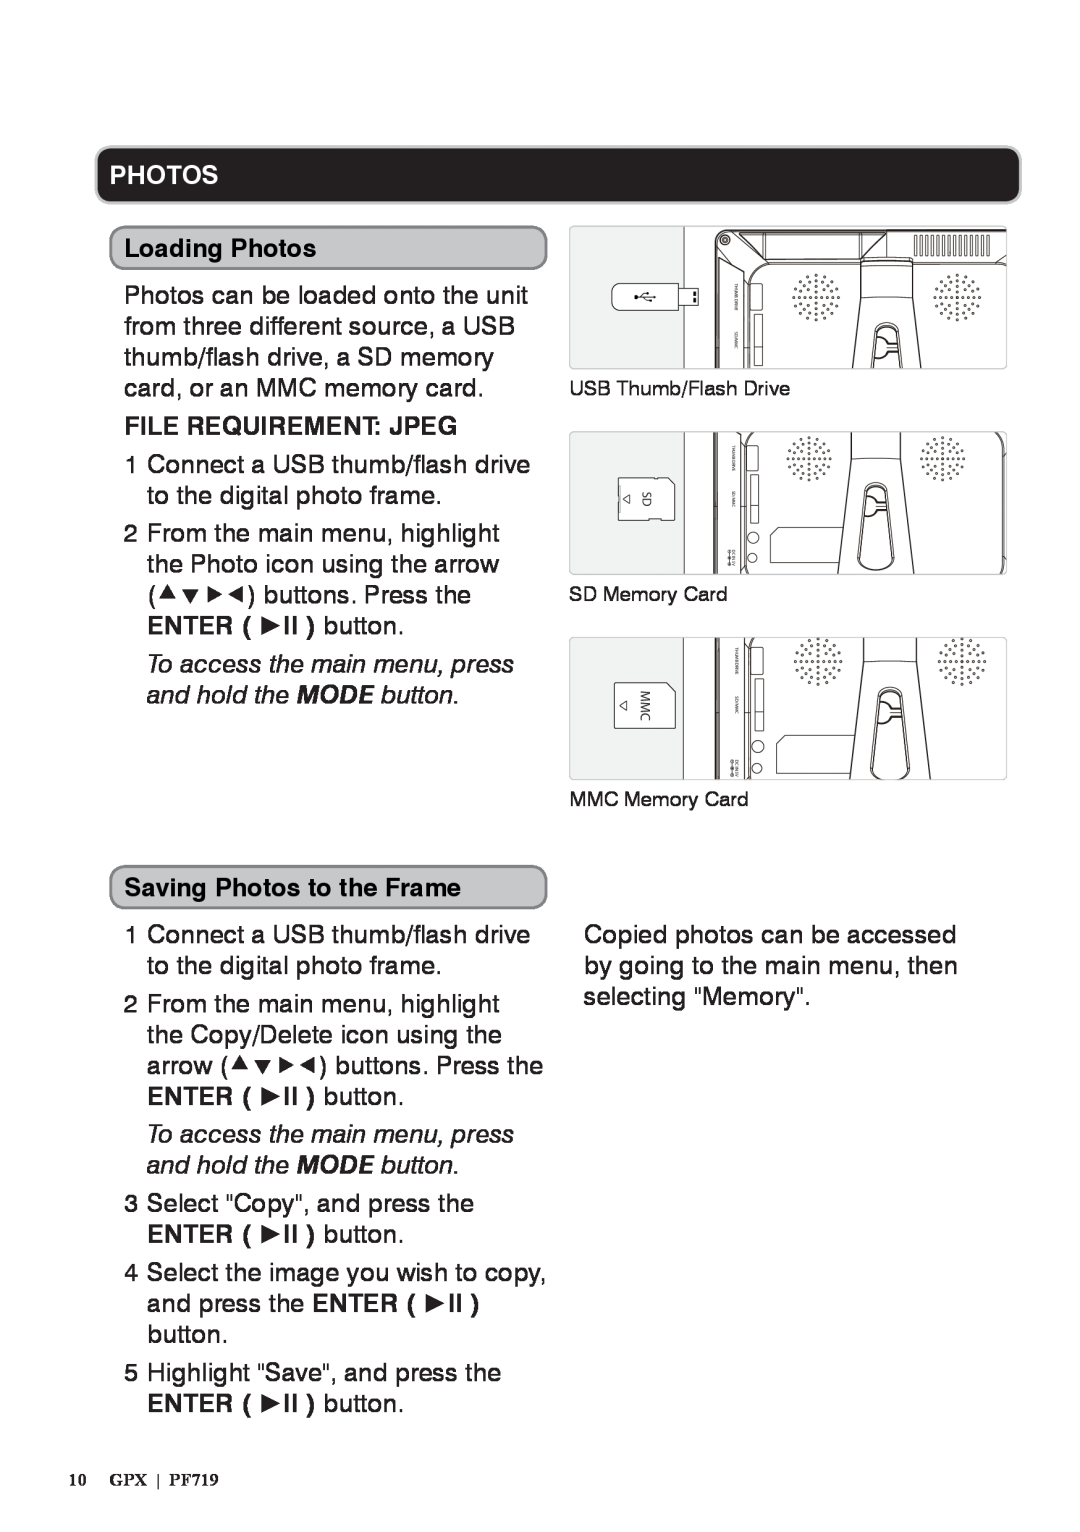 GPX PF719 manual photos, Loading Photos, File Requirement Jpeg, Saving Photos to the Frame 